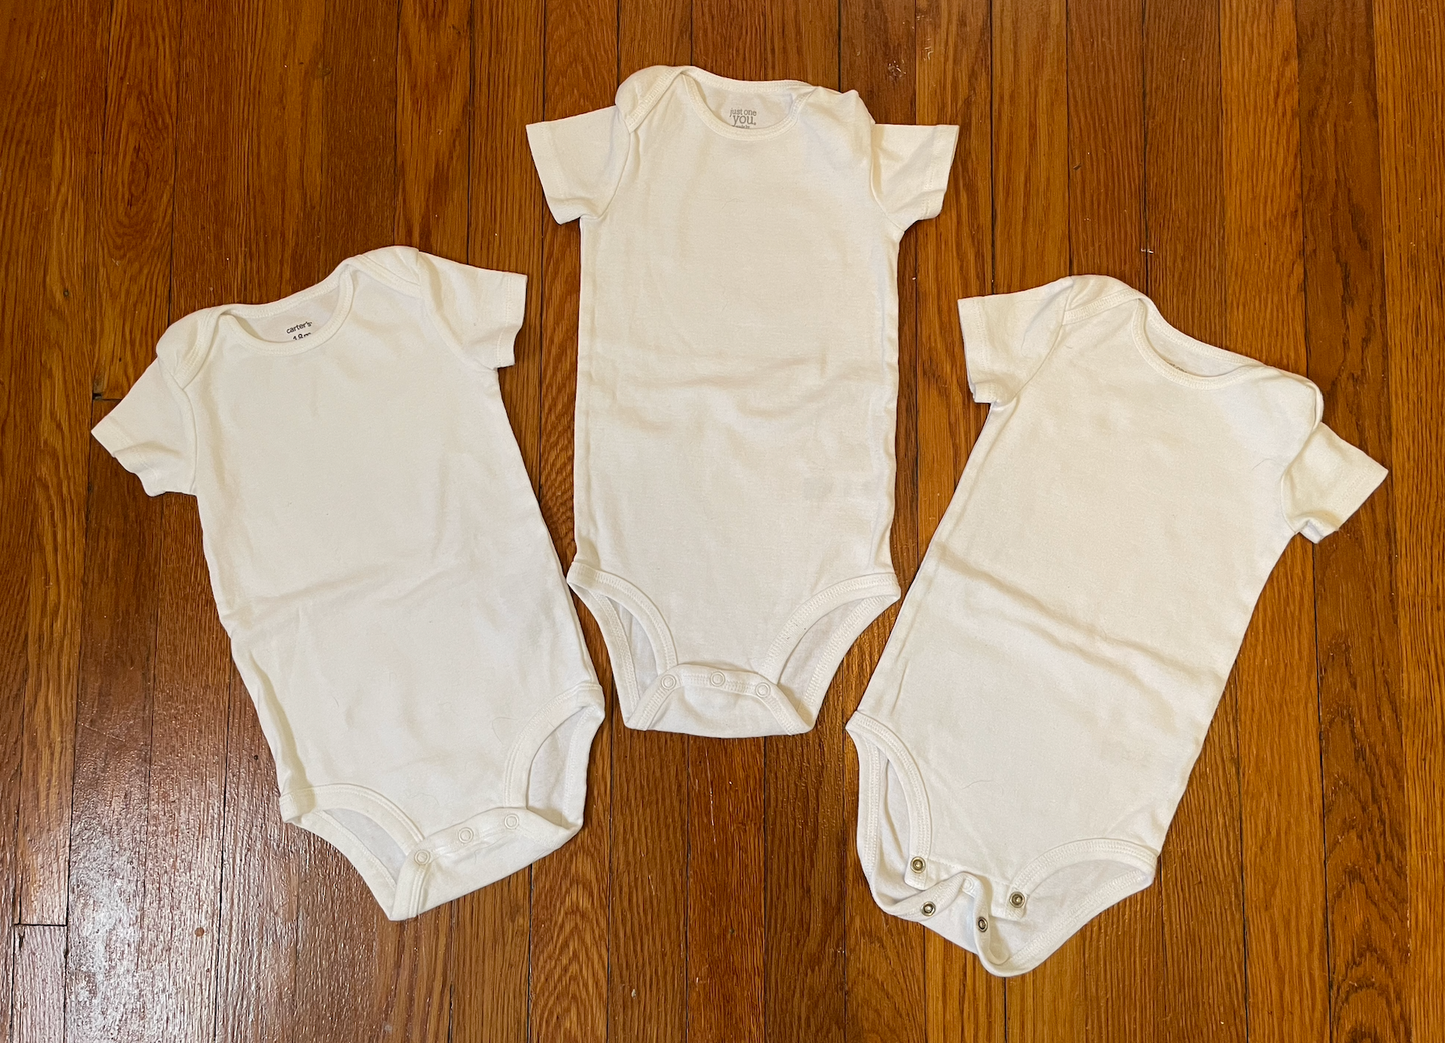 Carter's plain white onesies - set of 3 - brand new, never worn, 18 months - gender neutral